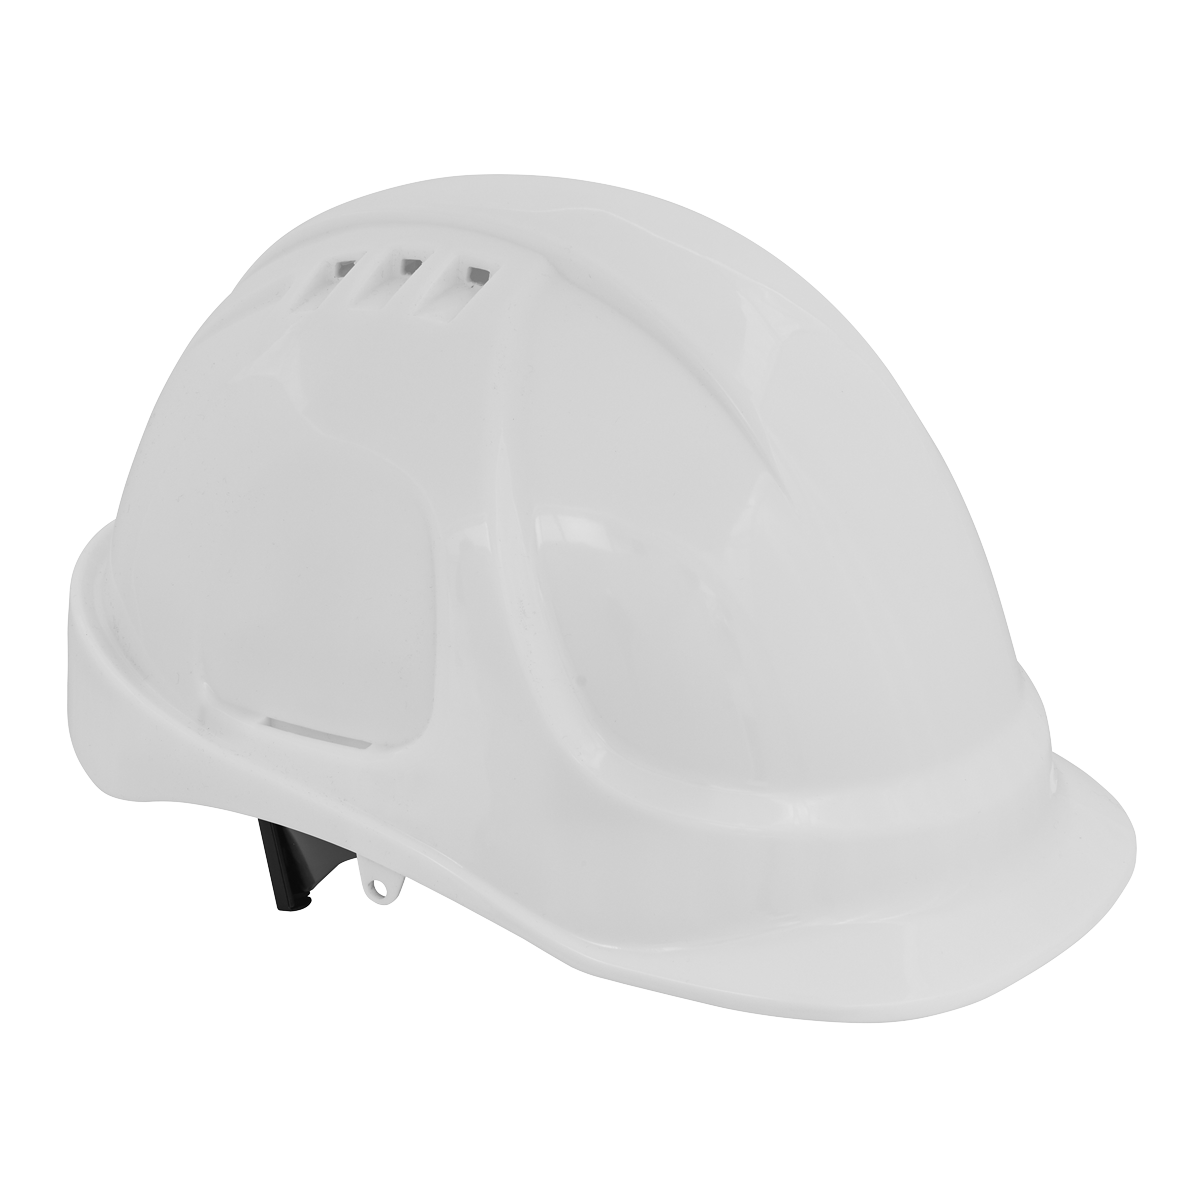 Sealey Safety Helmet - Vented (White)